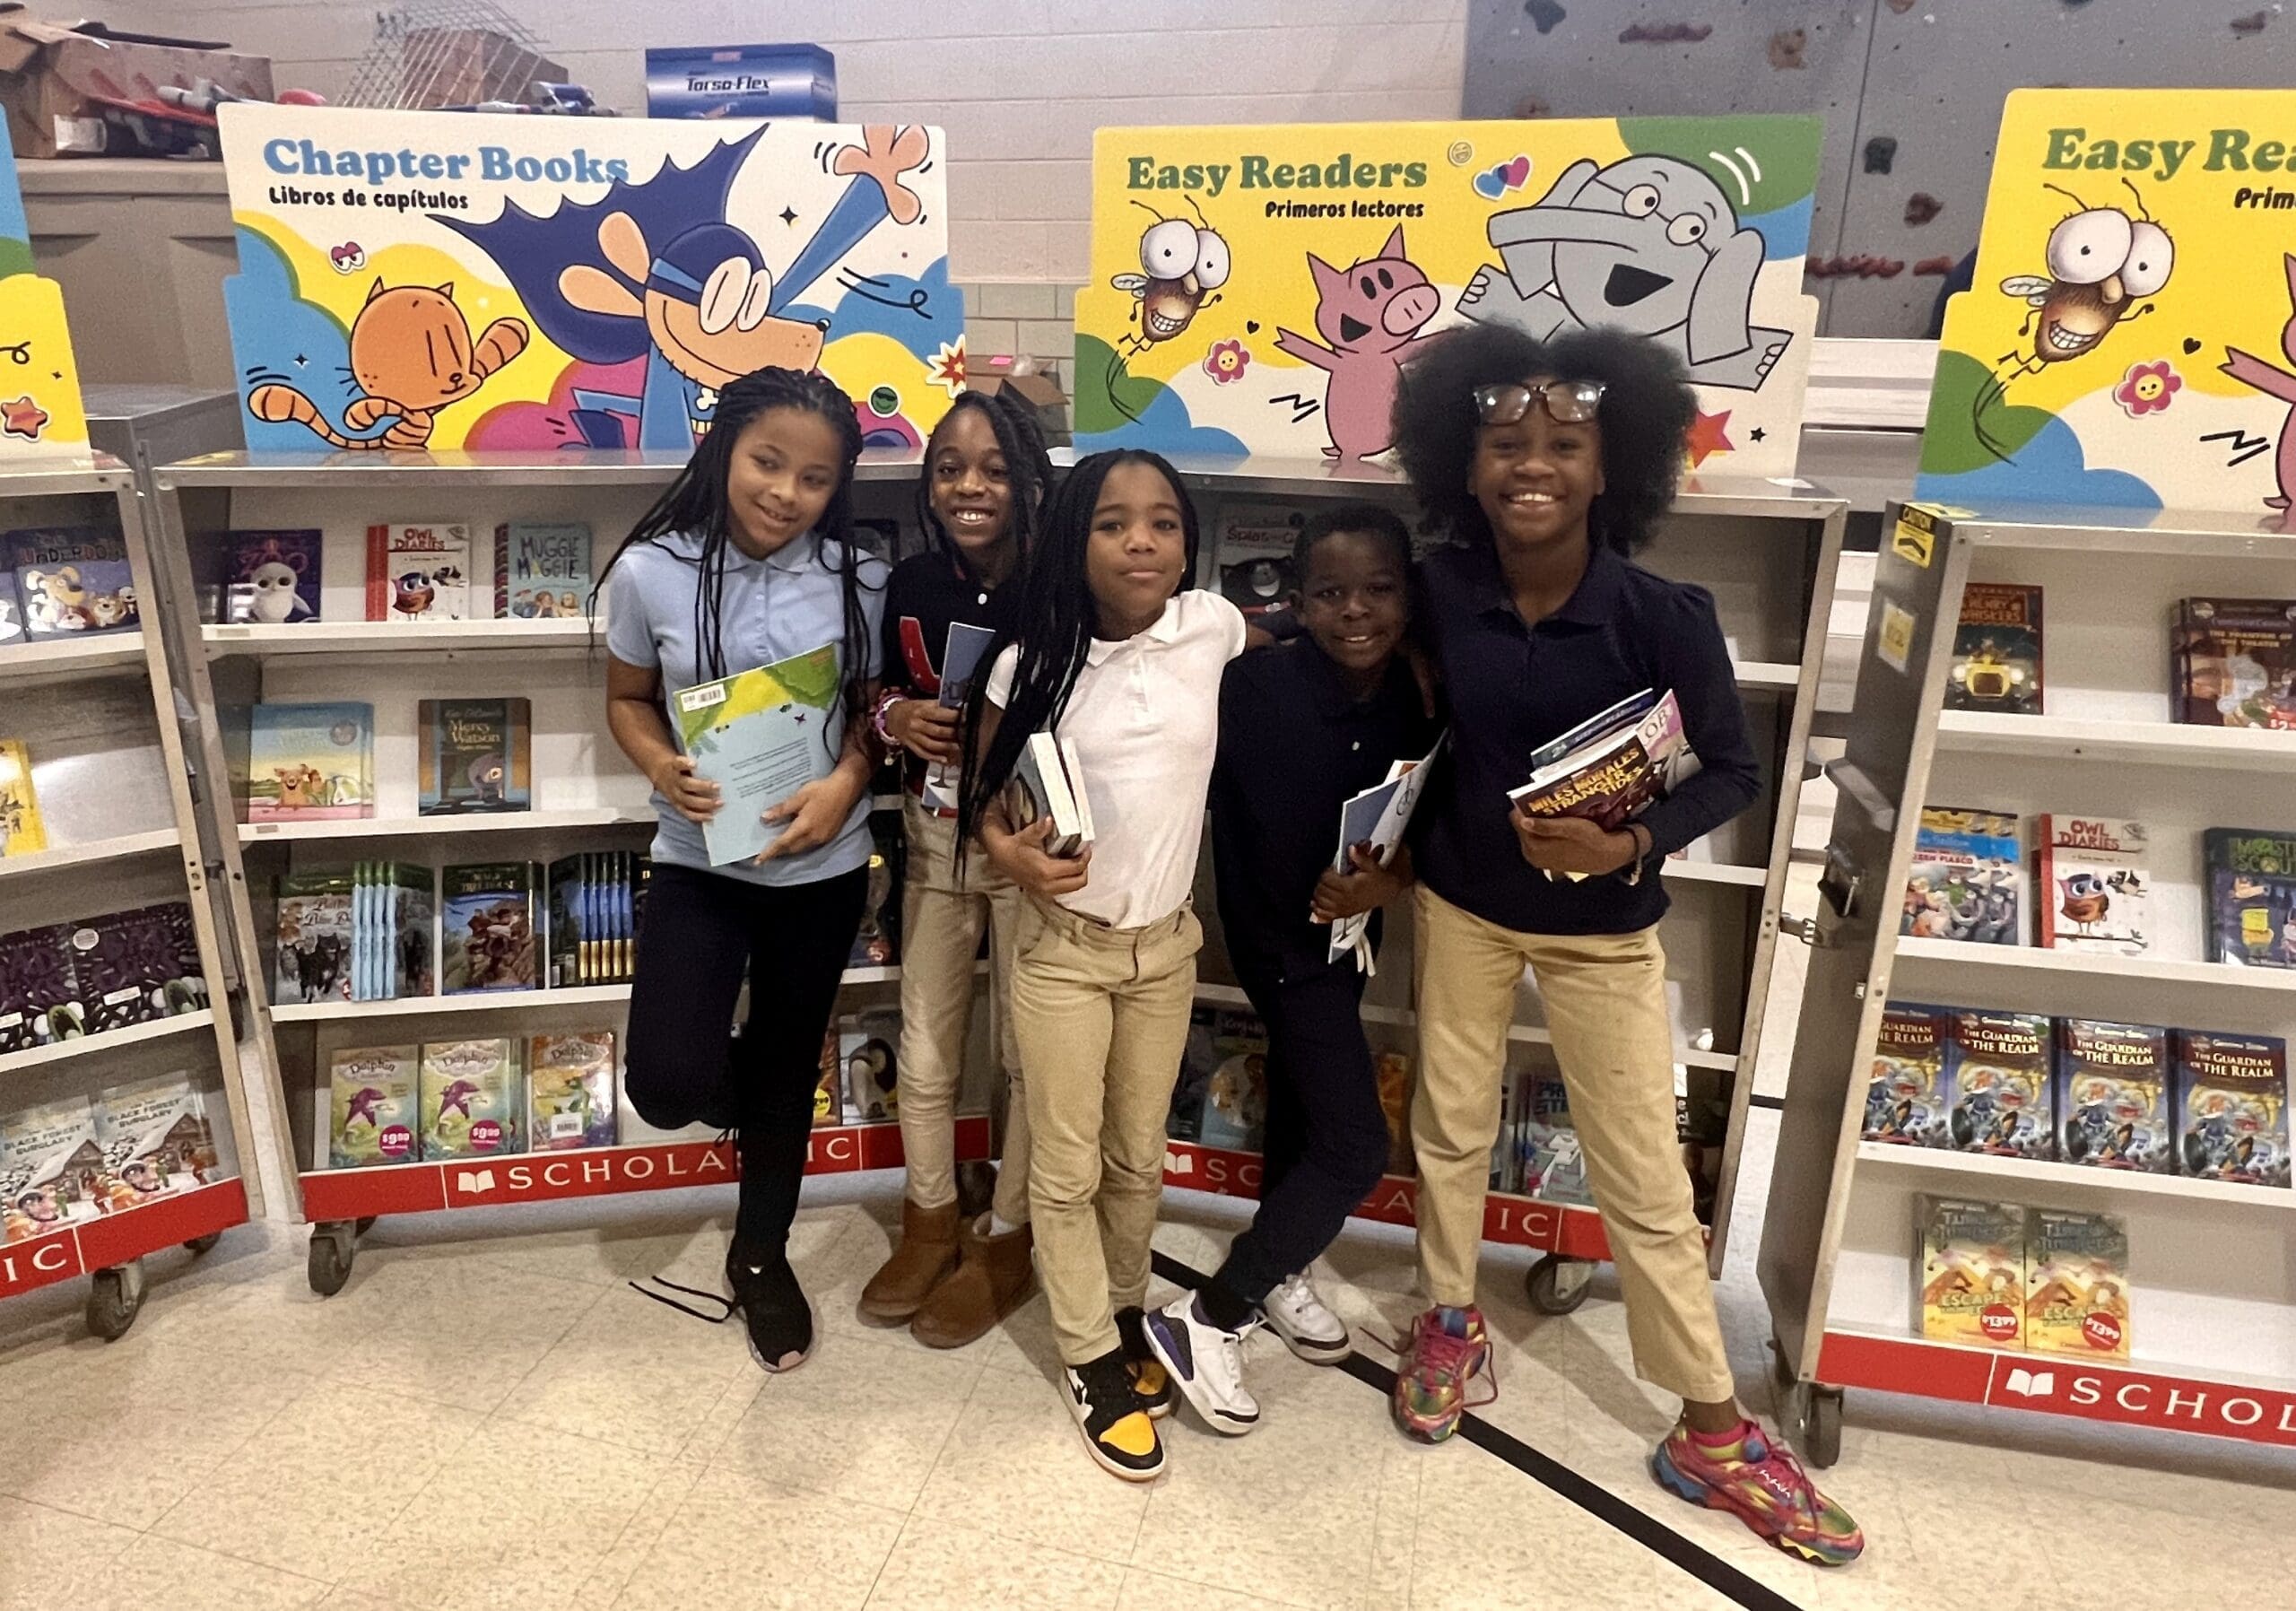 Thomas Edison students at the holiday book fair. From left, TruLynn Adams, Anajah Hickman, Alaihah Thompson, Kayden Washington, Destiny Grimes.